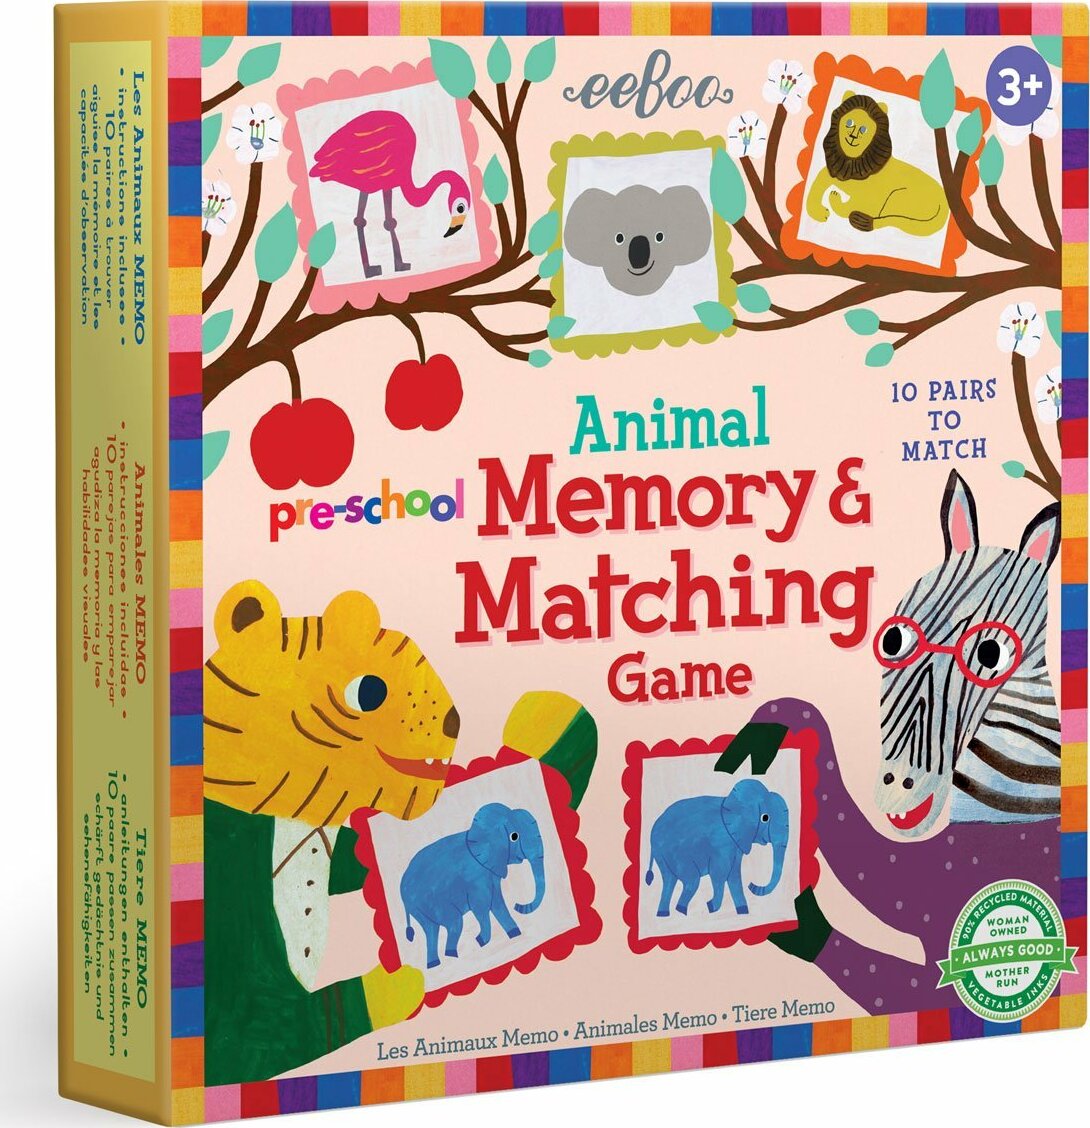 Pre-school Animal Memory  Matching Game